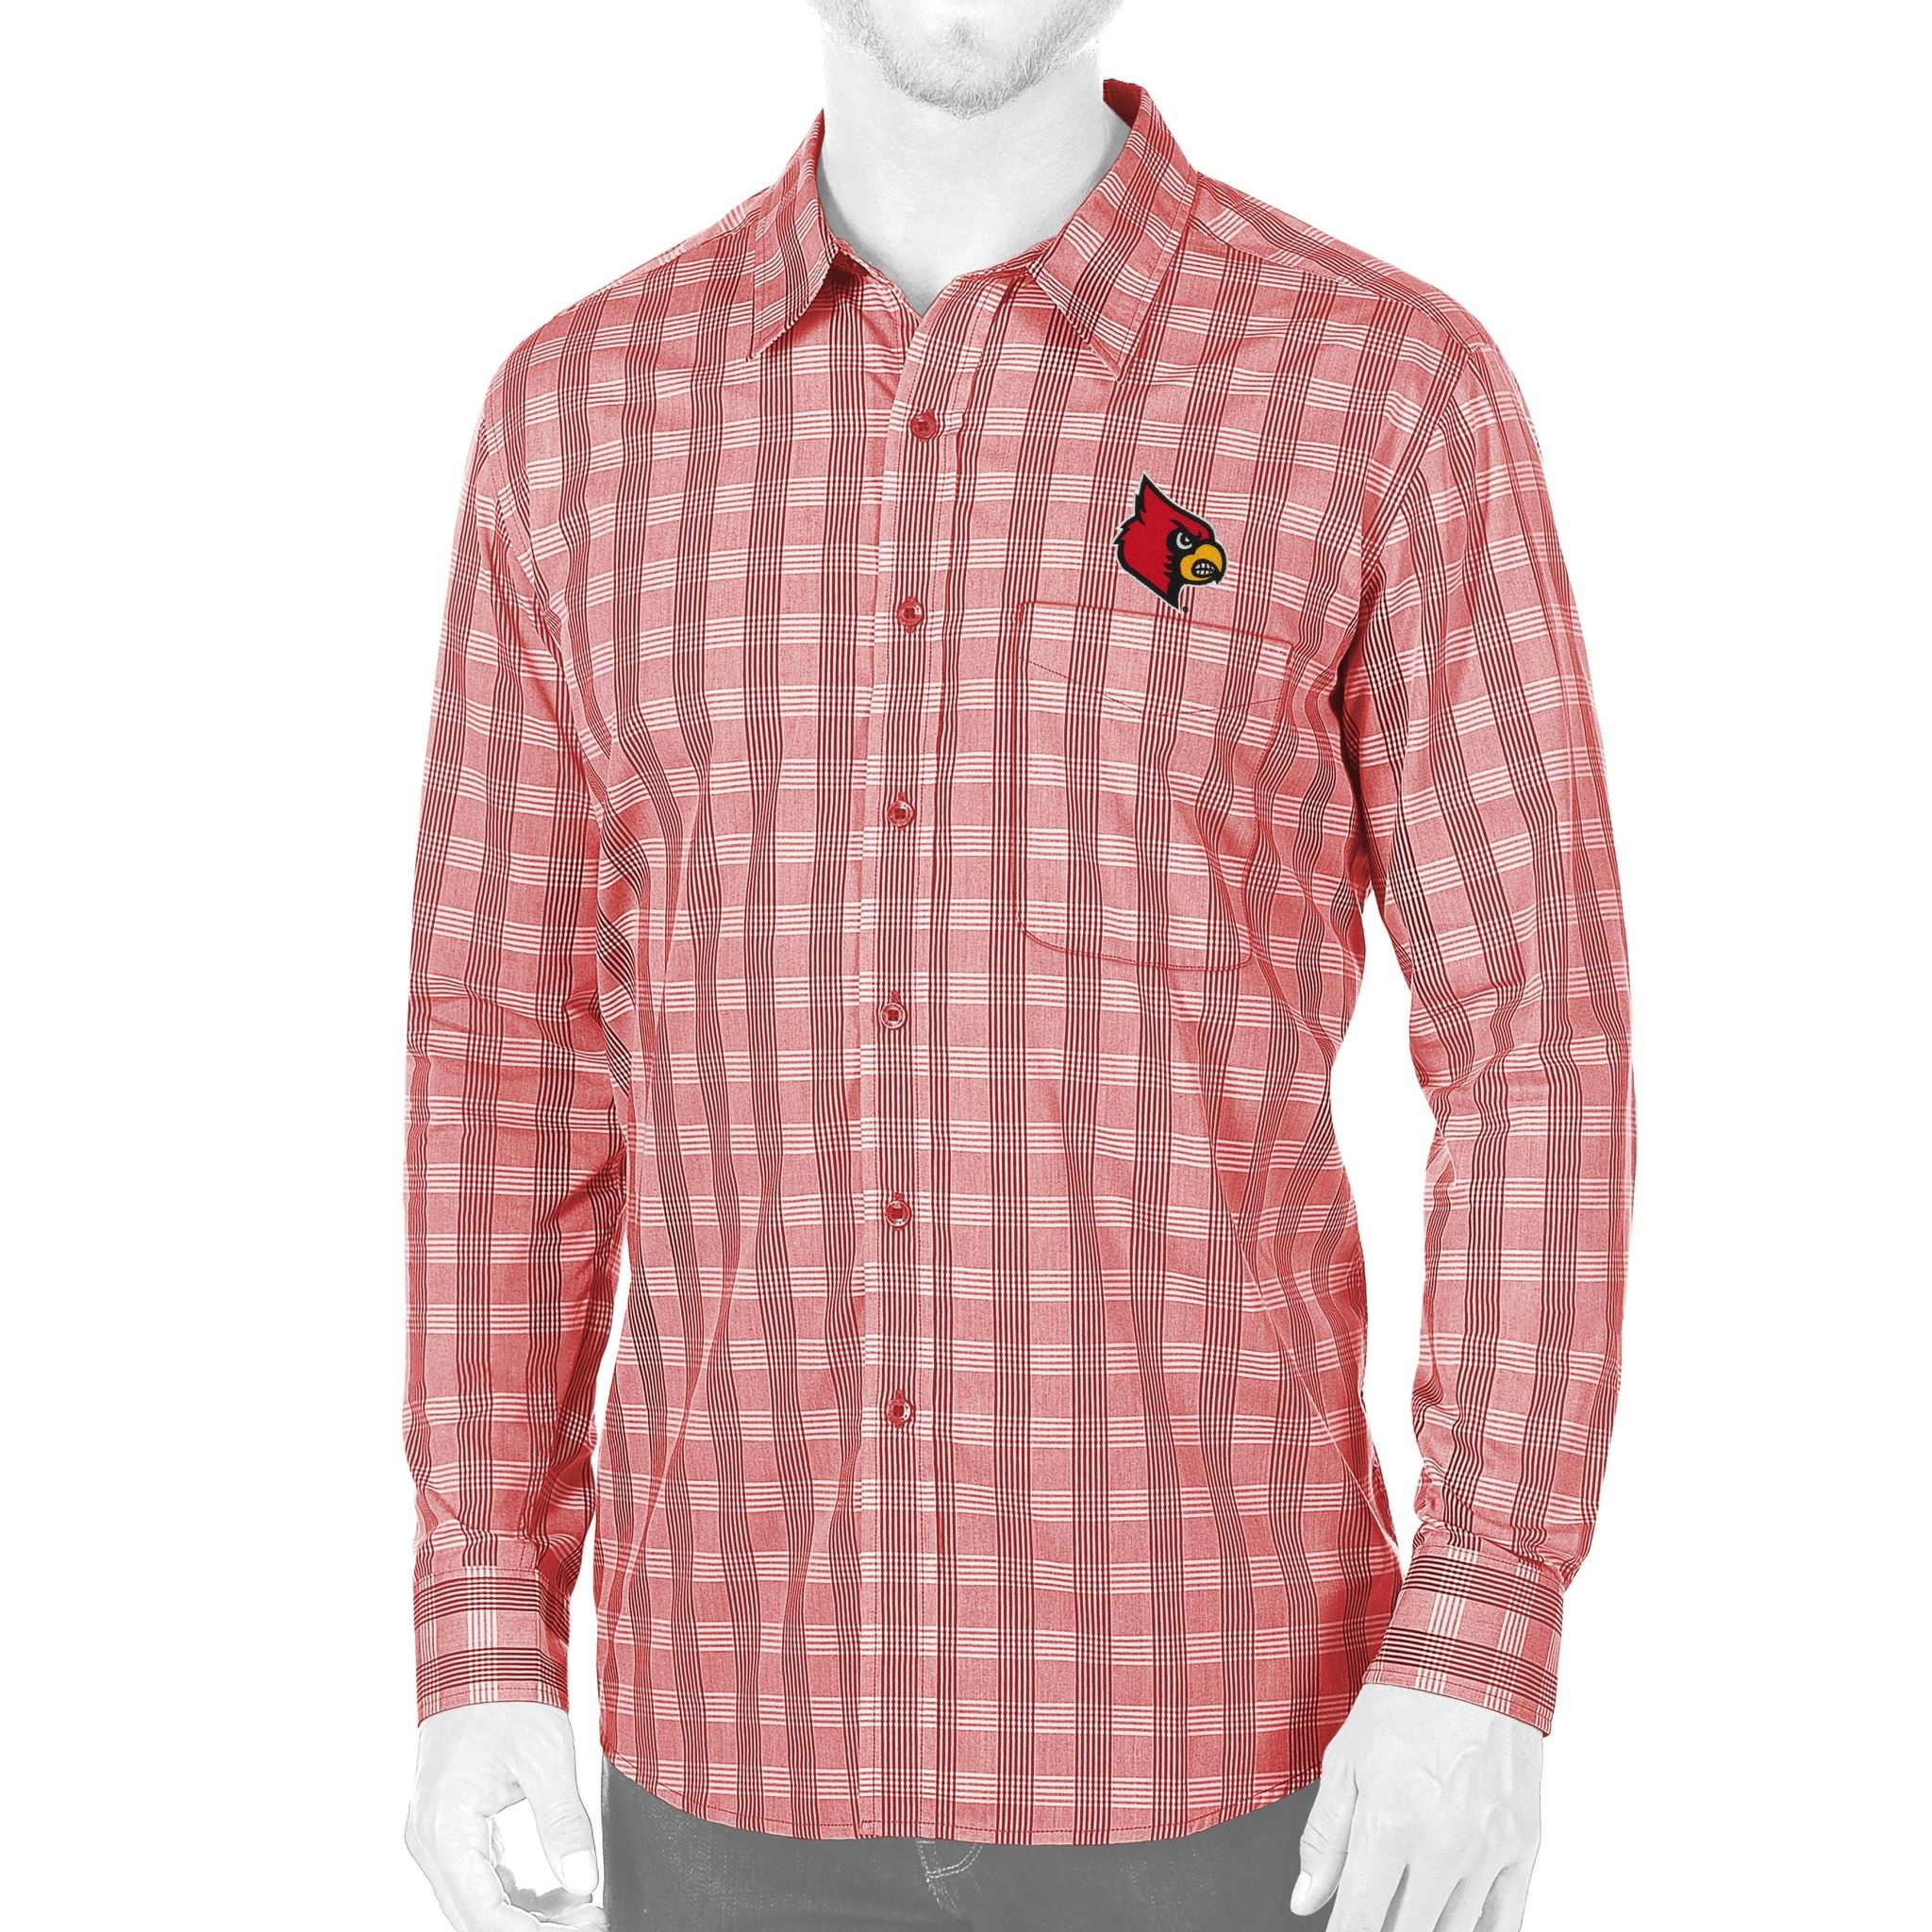 cardinals dress shirt